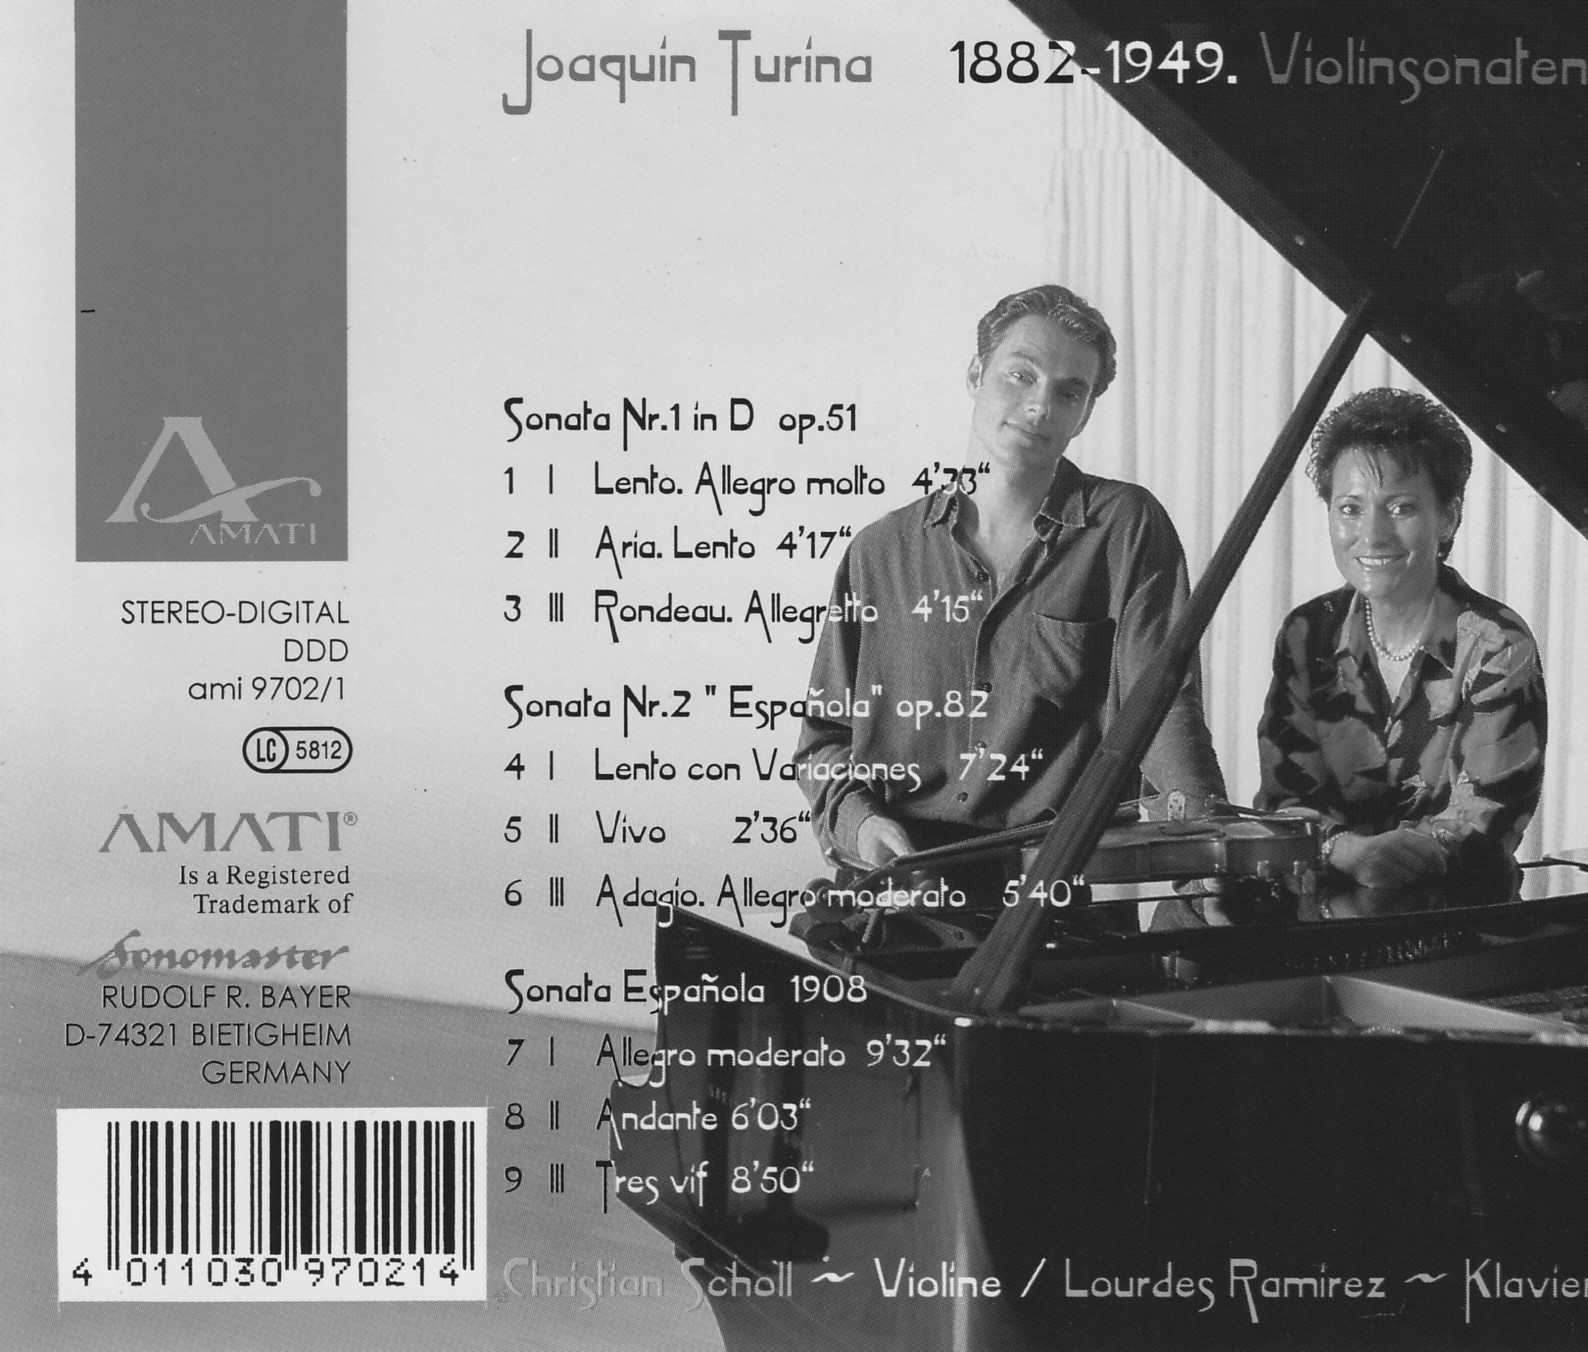 Joaquin Turina - Violinsonaten